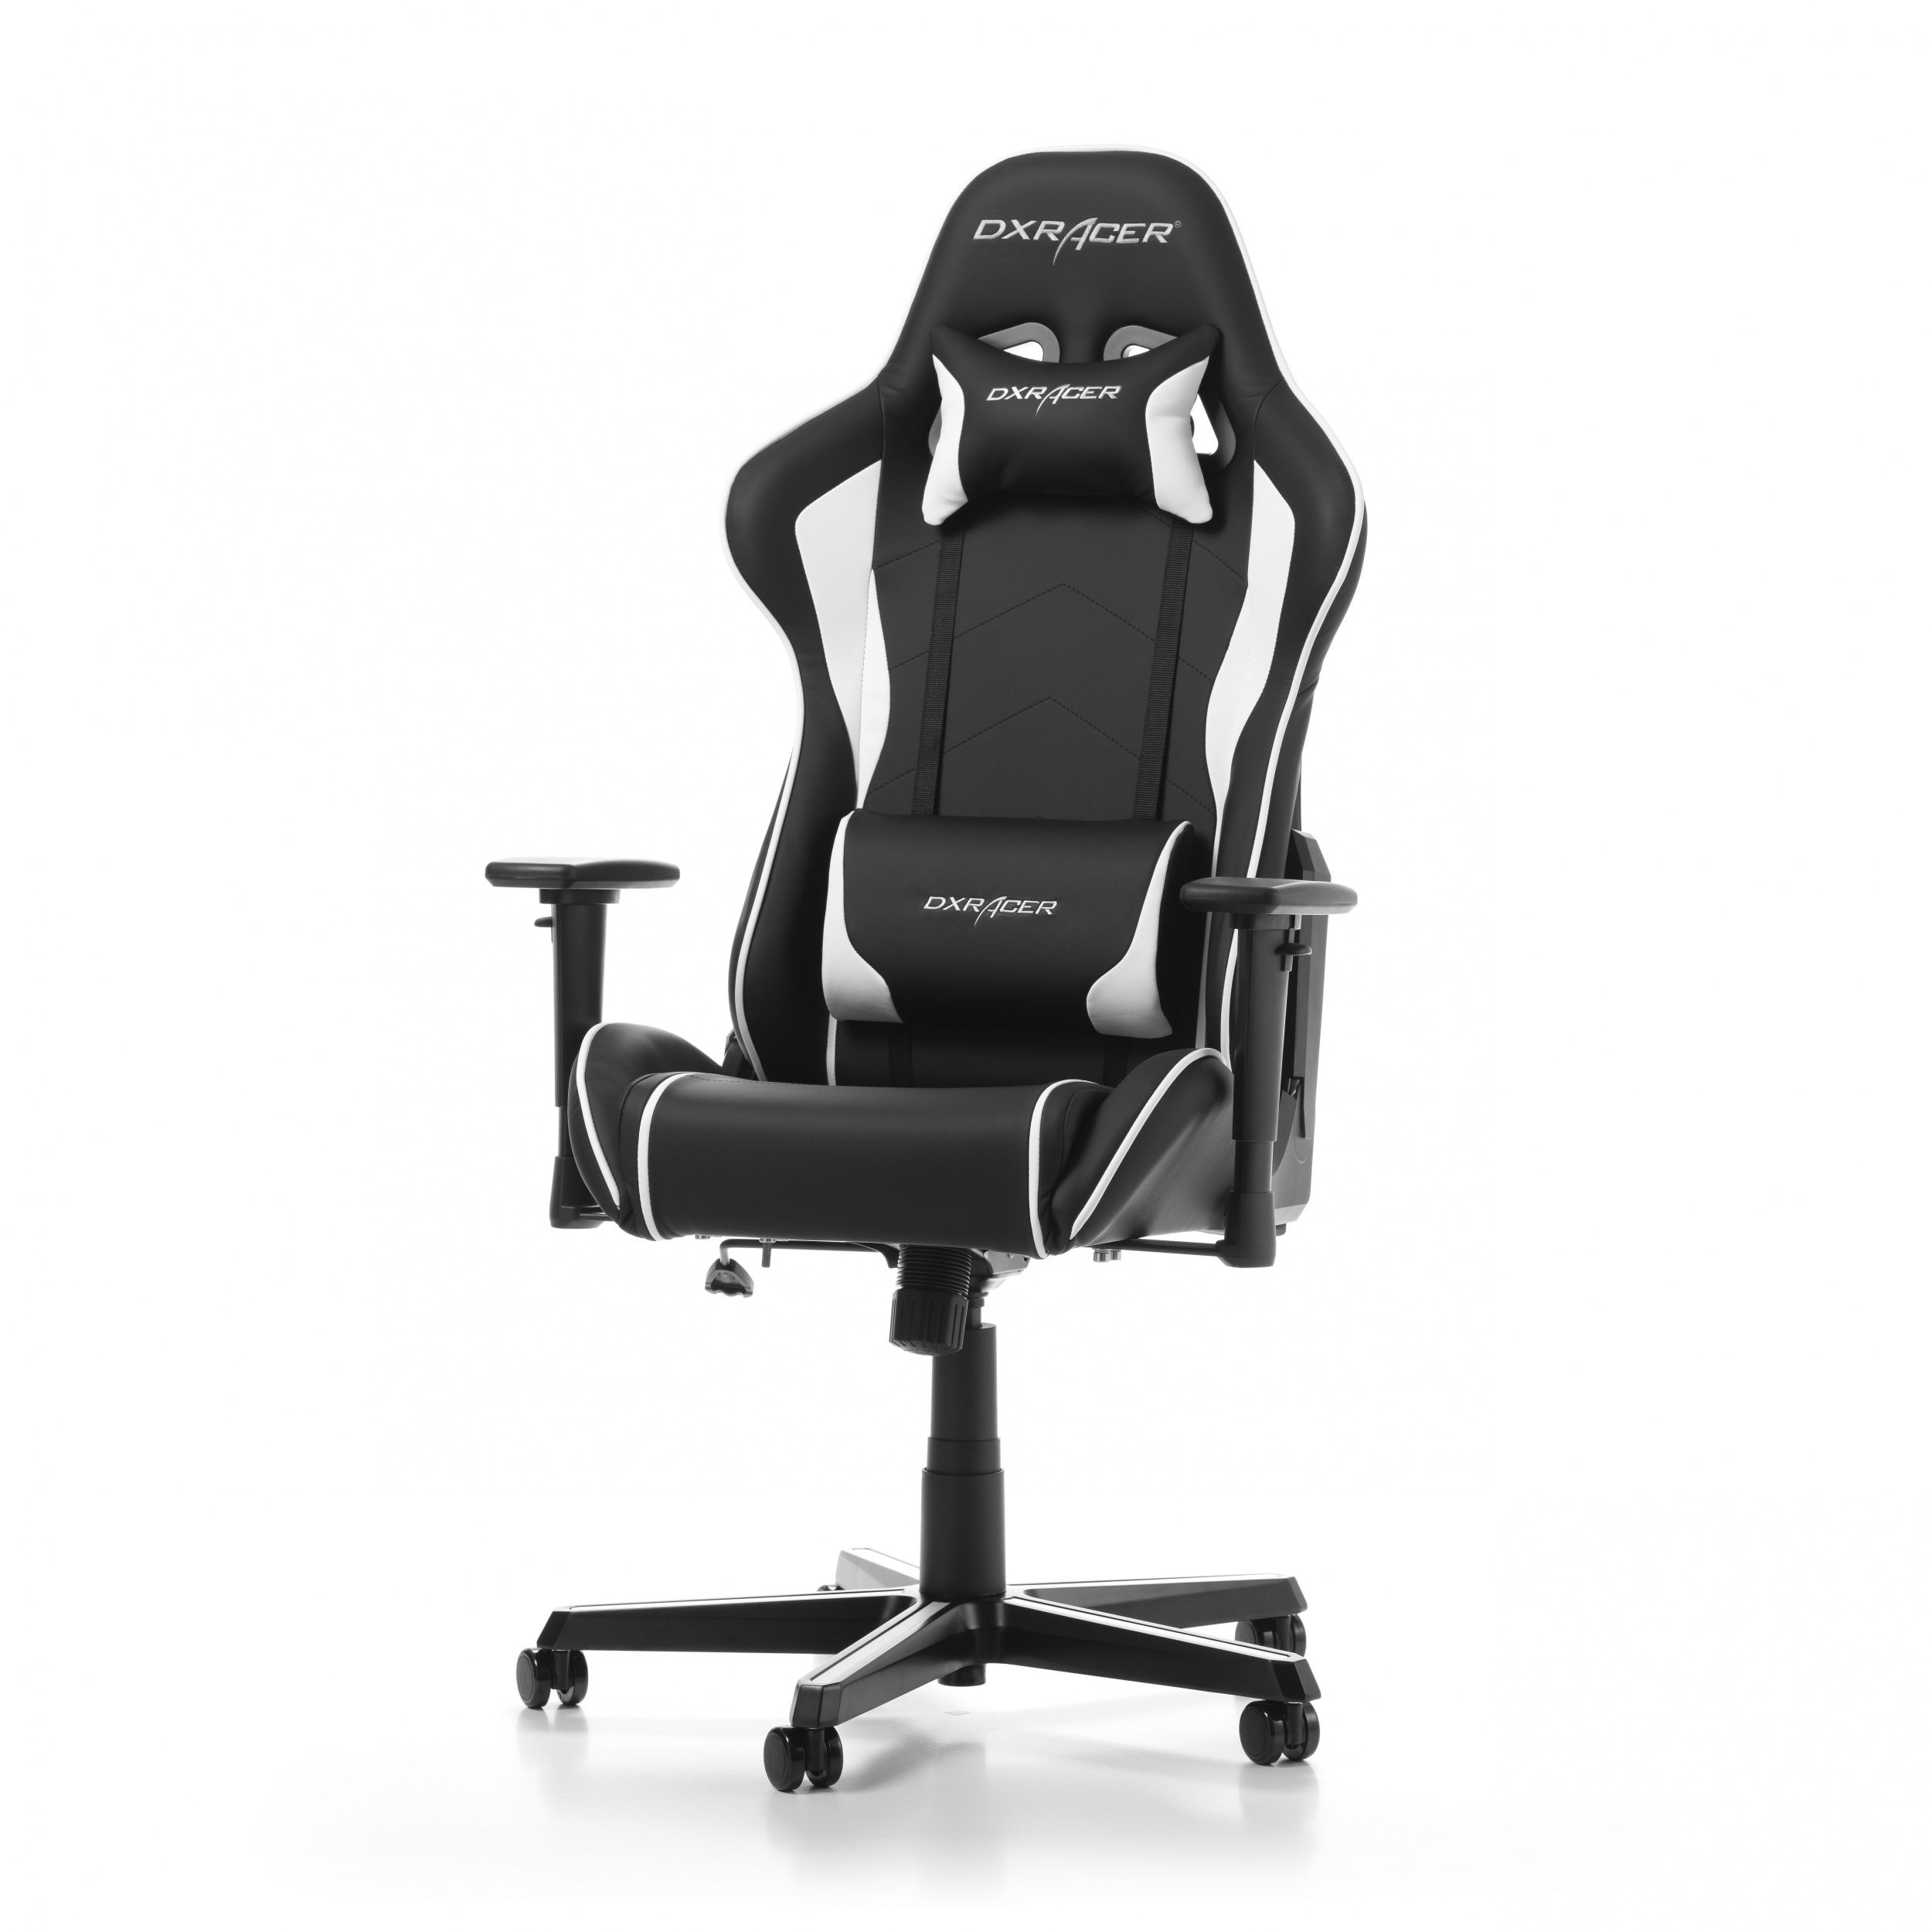  DXRacer FORMULA  F08 NW Gaming Chair Black White 4GEEKS 